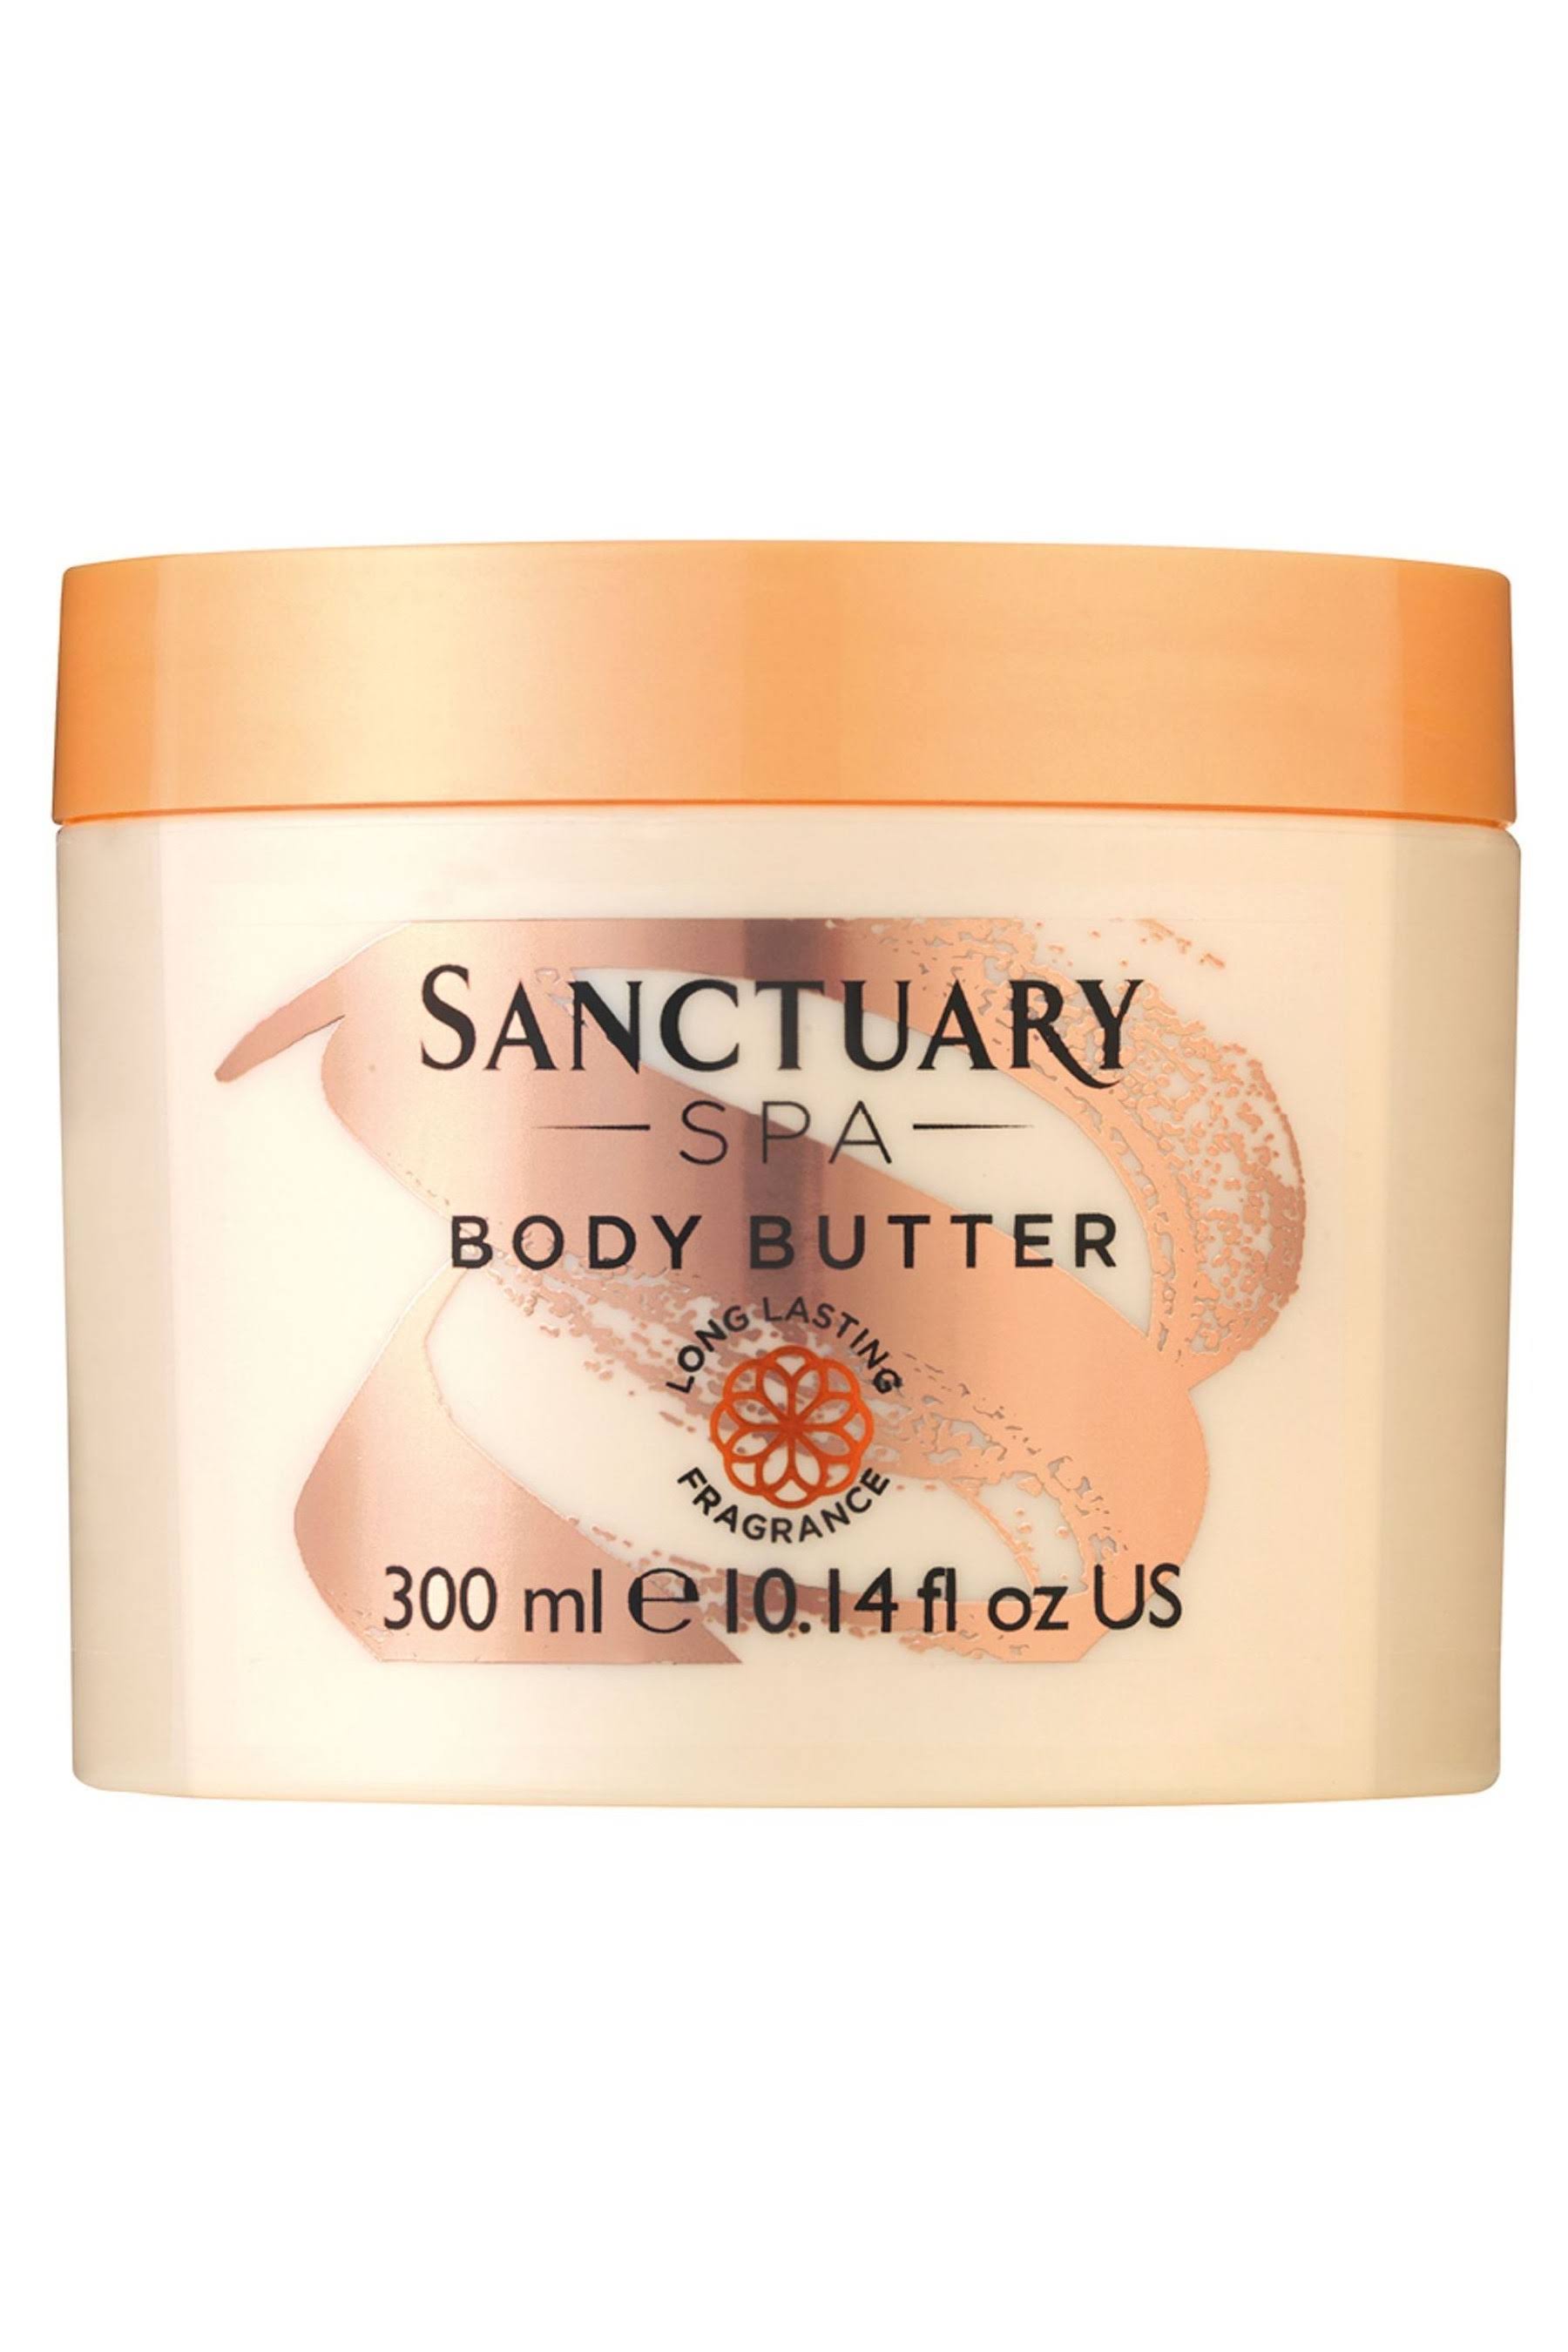 Sanctuary Spa Body Butter, 300 ml